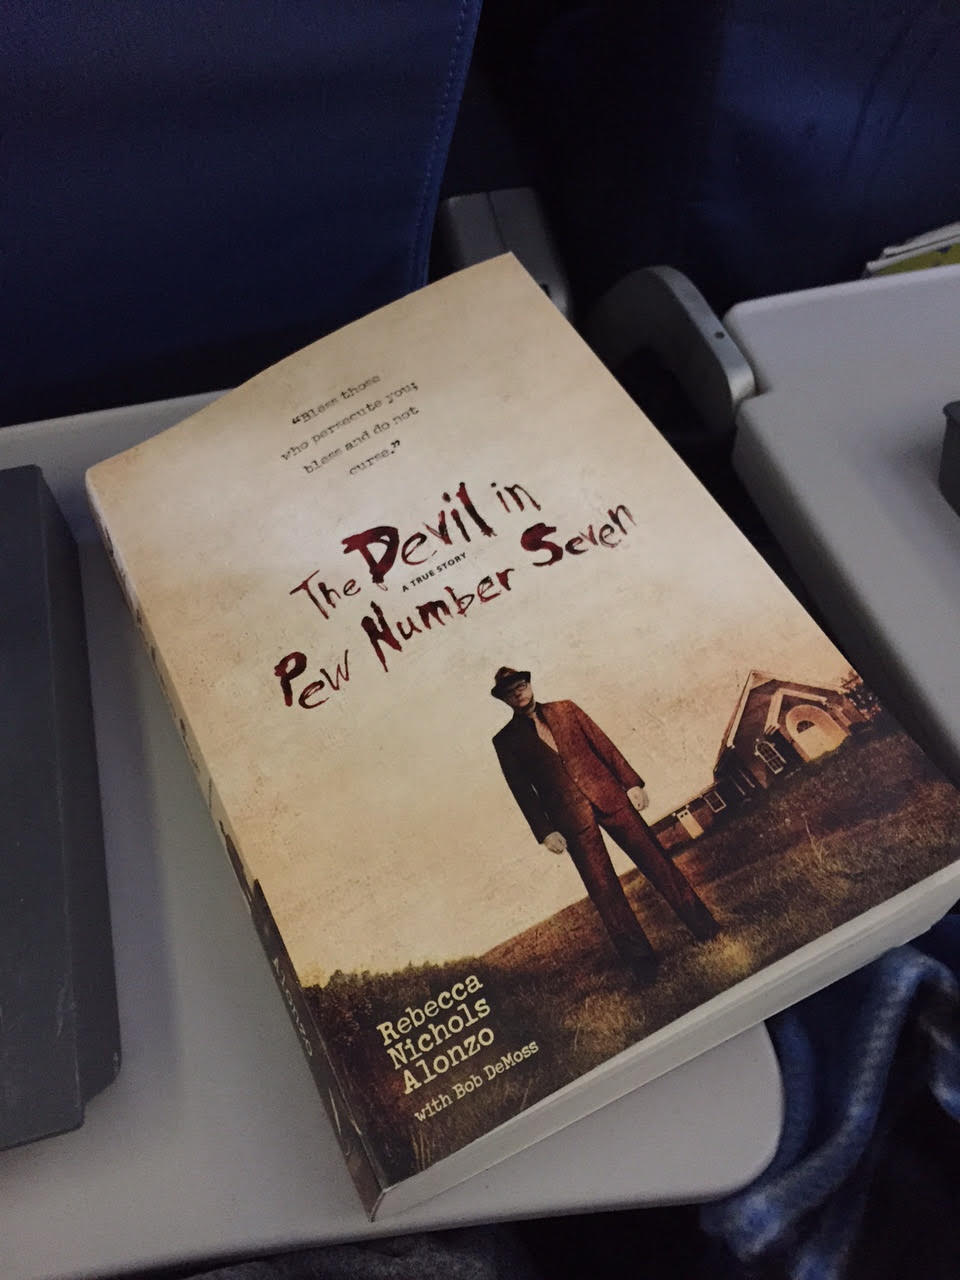 4 Books I Read on the Plane